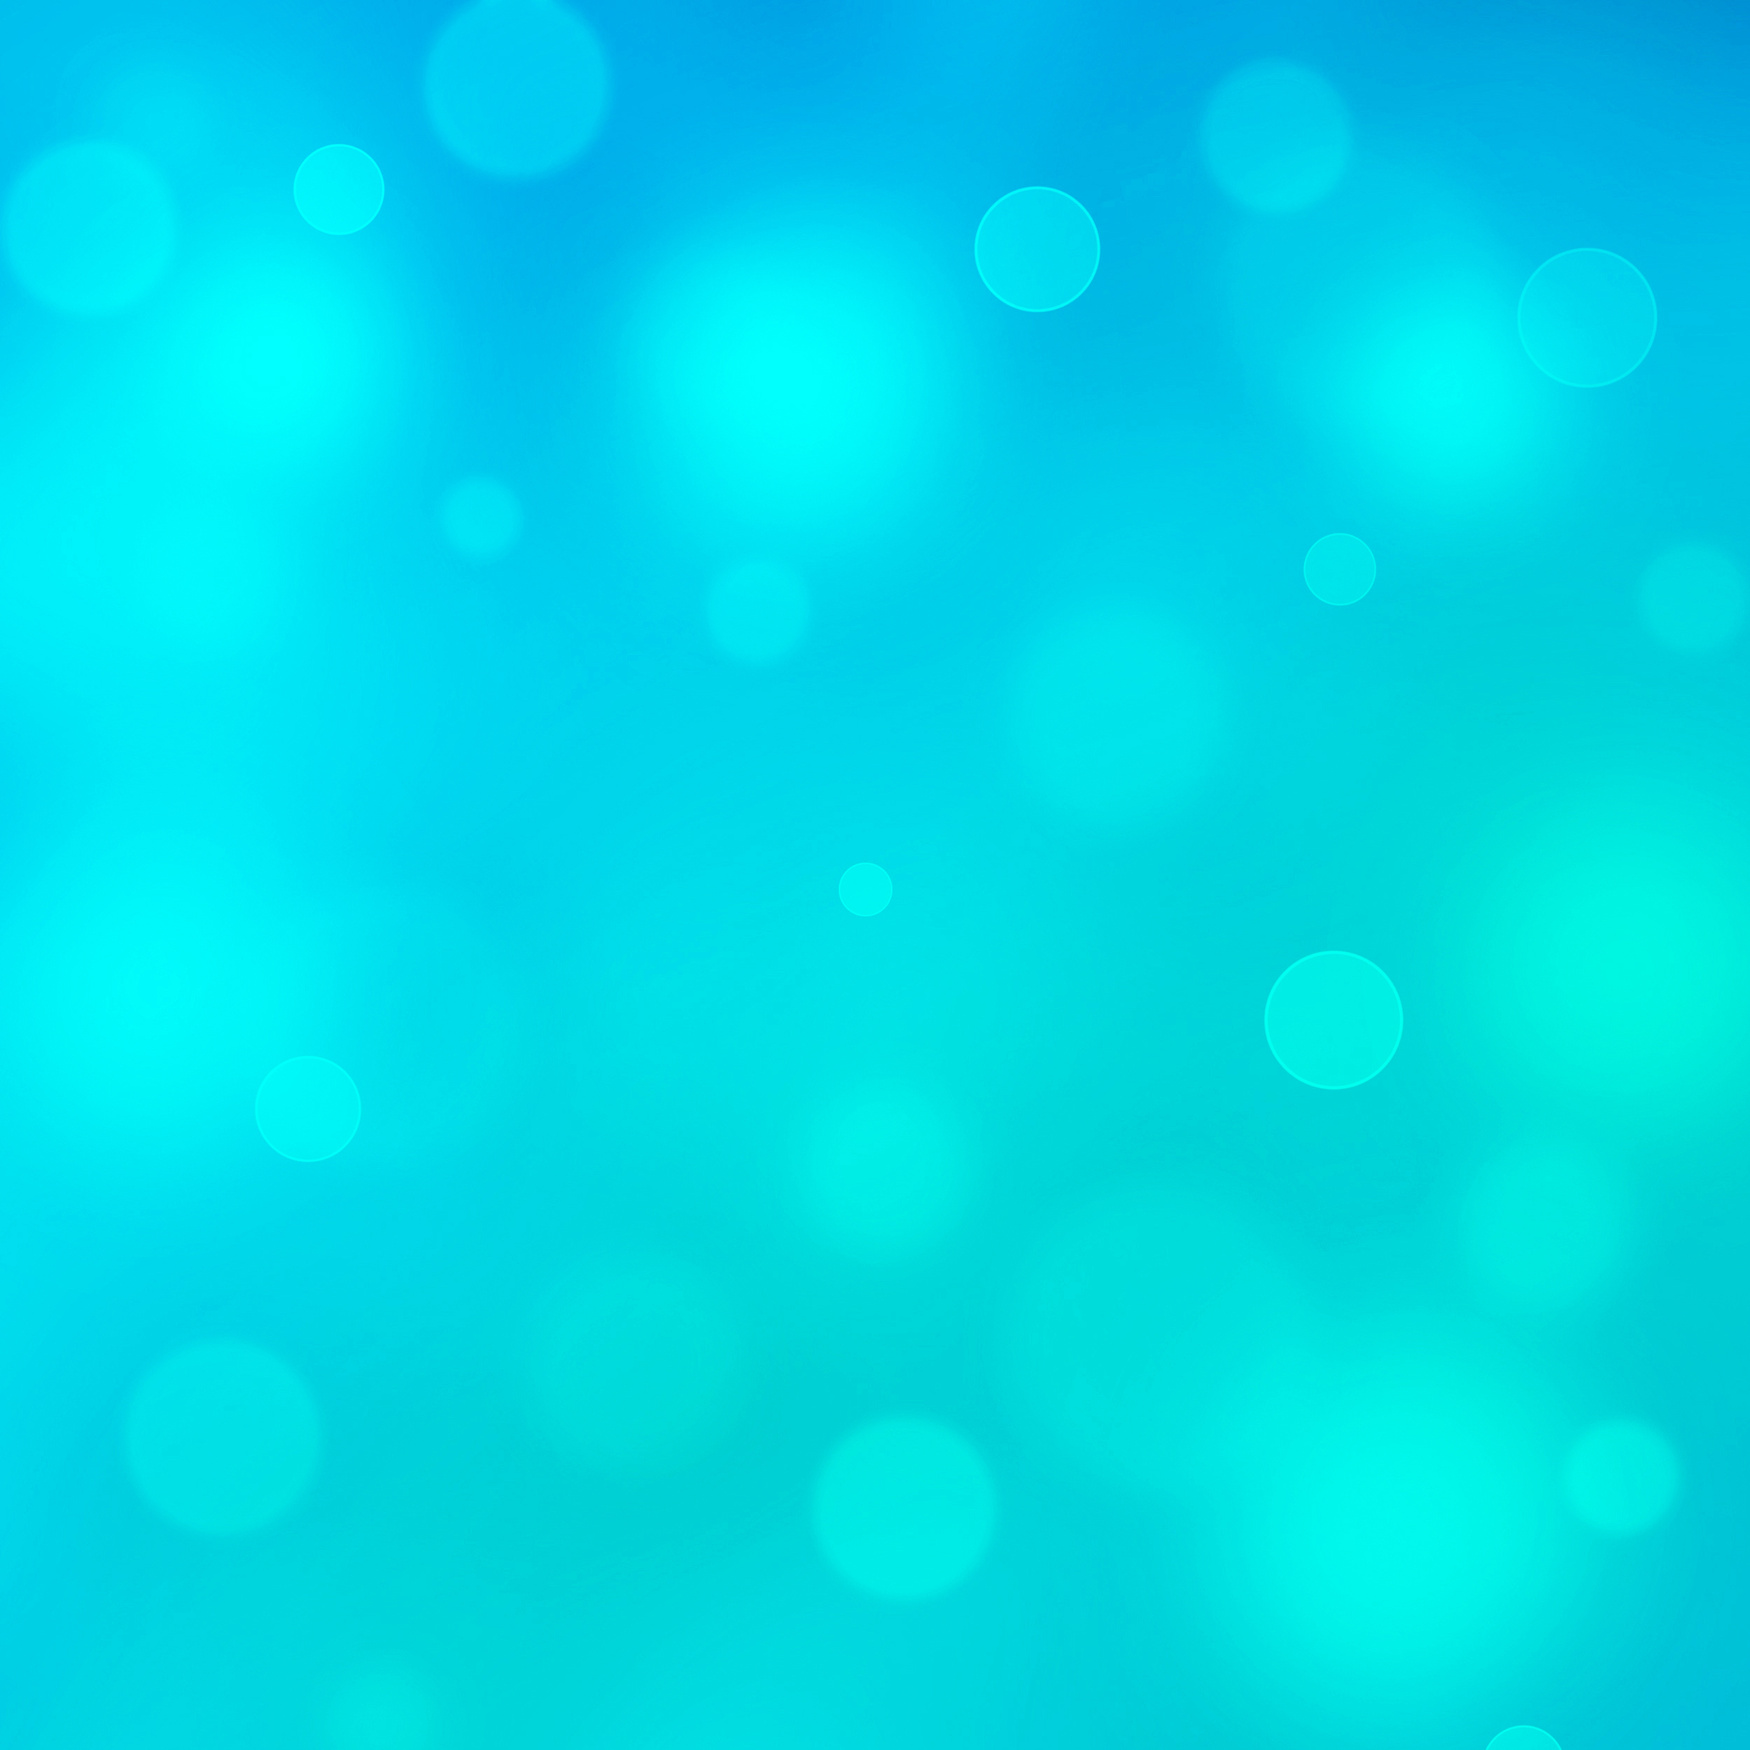 Teal Turquoise Blue Background Illustration